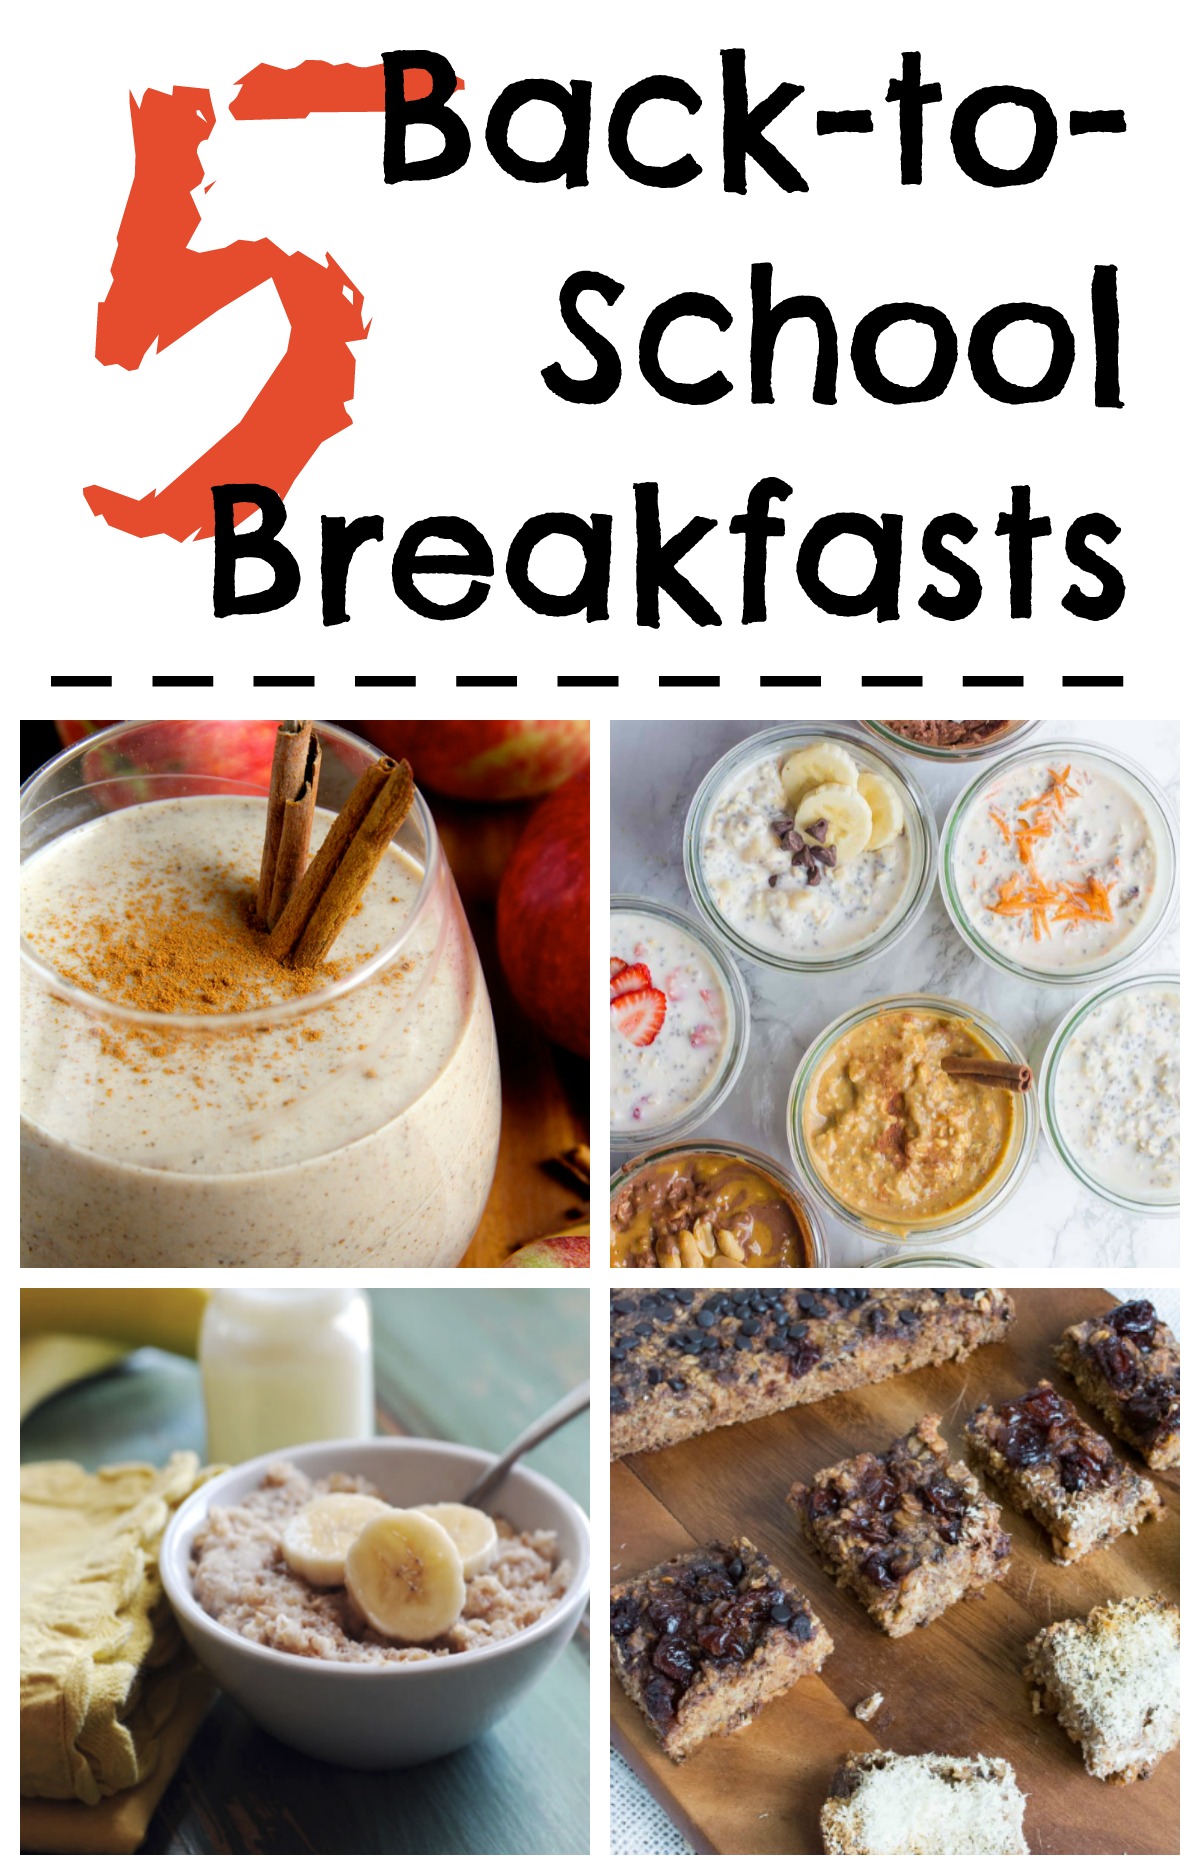 5 Make Ahead Breakfast Ideas with Oatmeal | Sprint 2 the Table